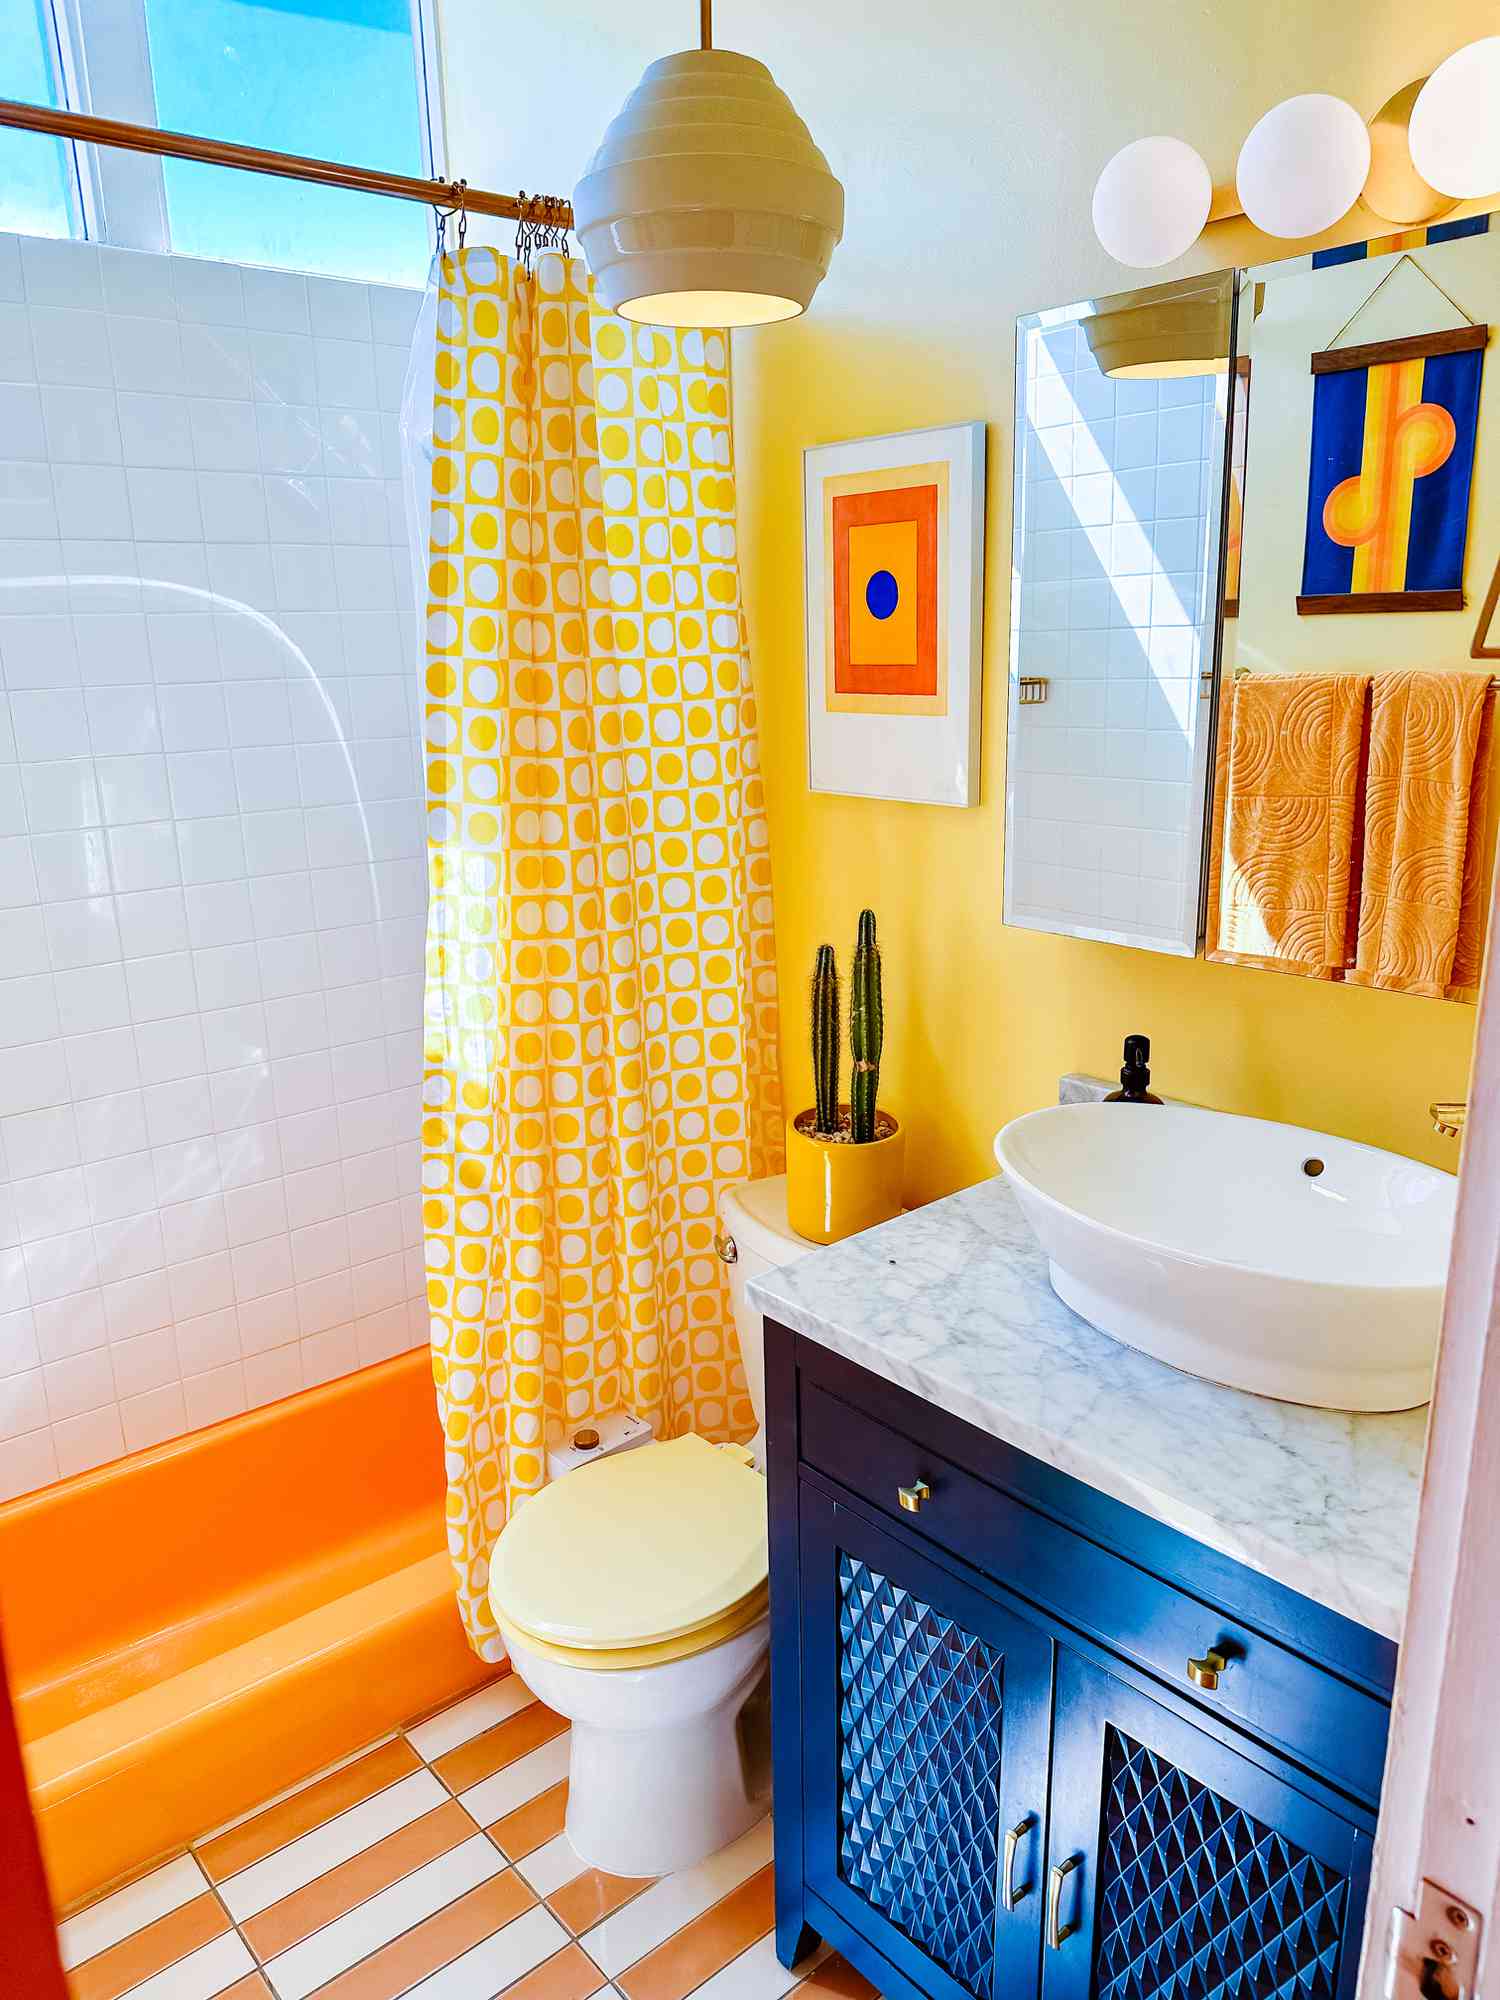 royal blue, yellow, and orange bathroom